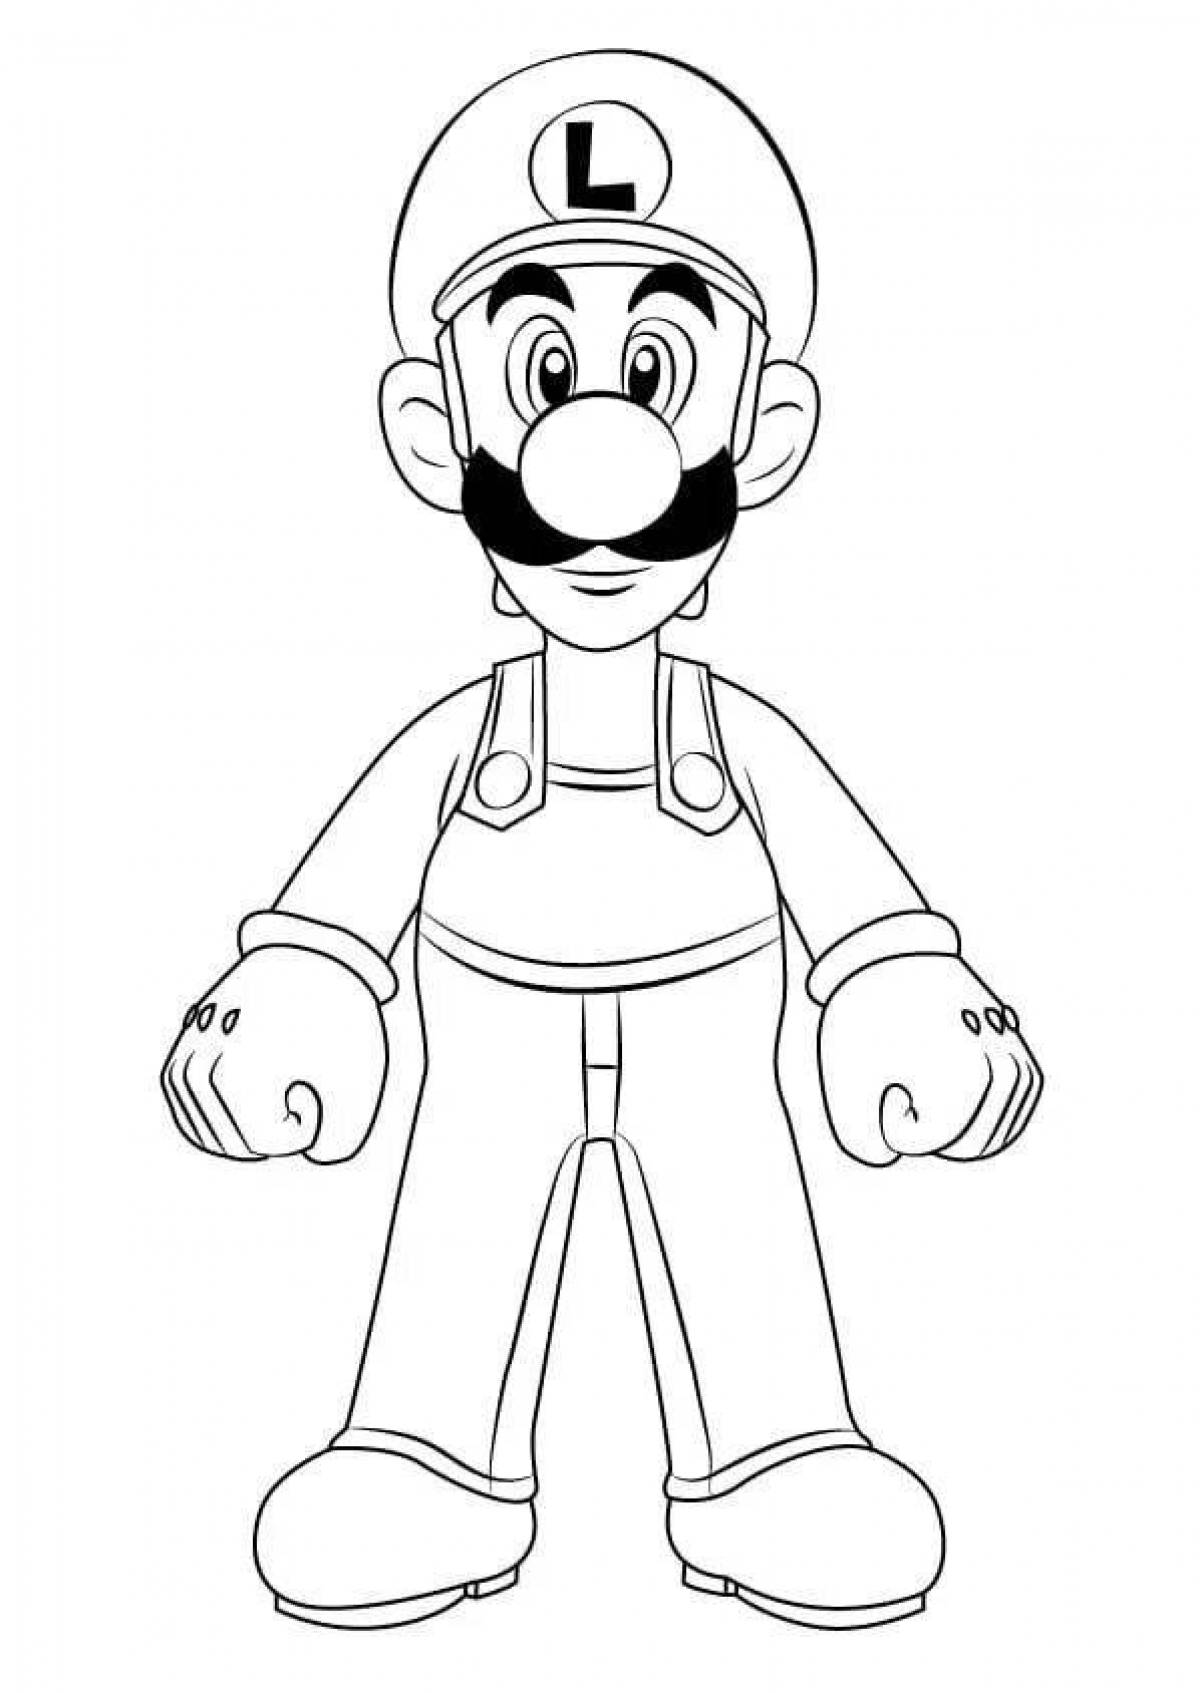 Luigi #1